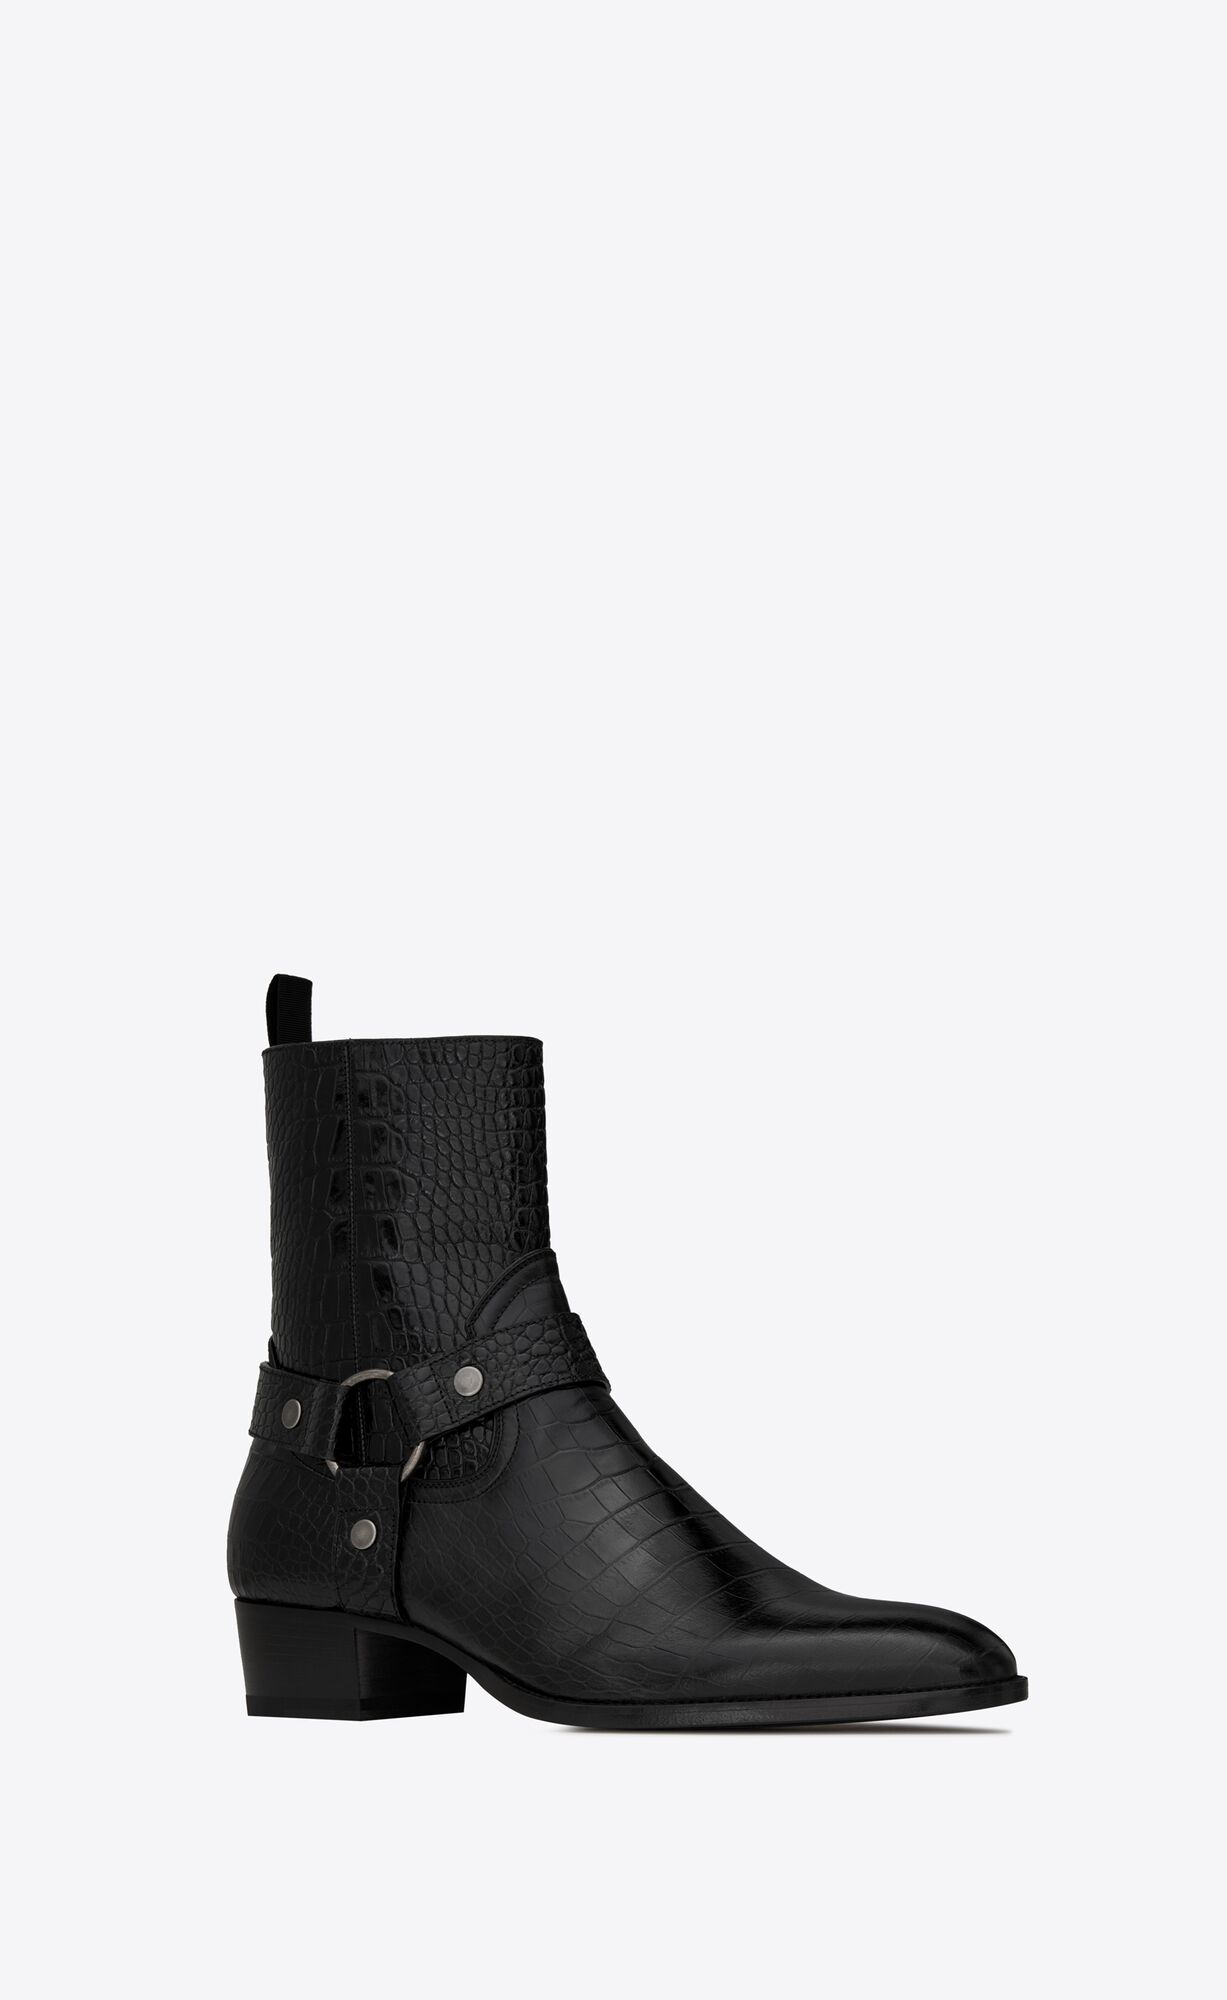 WYATT harness boots in crocodile-embossed leather | Saint Laurent ...